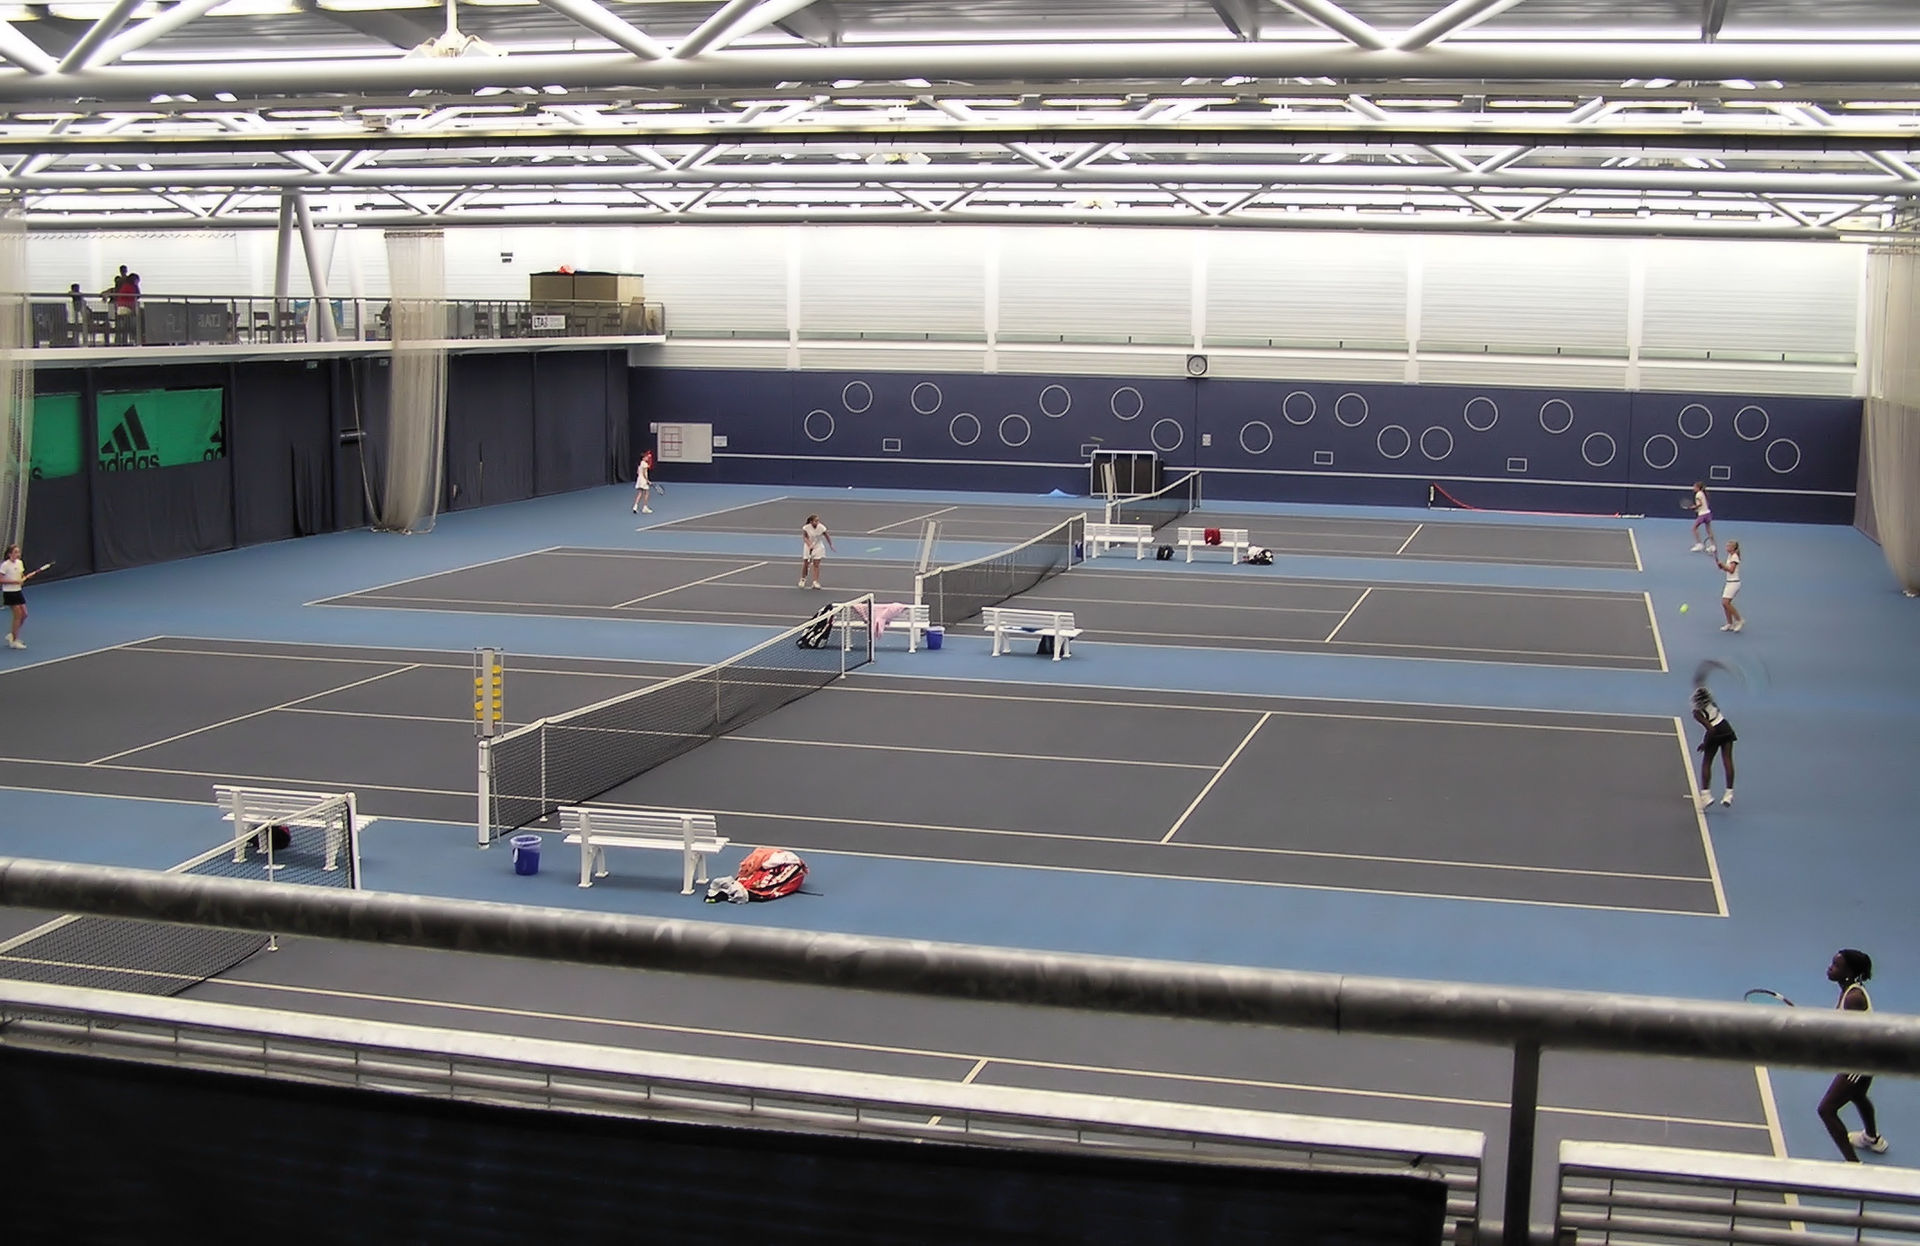 University of Bath - The University of Bath Sports Training Village indoor tennis courts, Bath, England